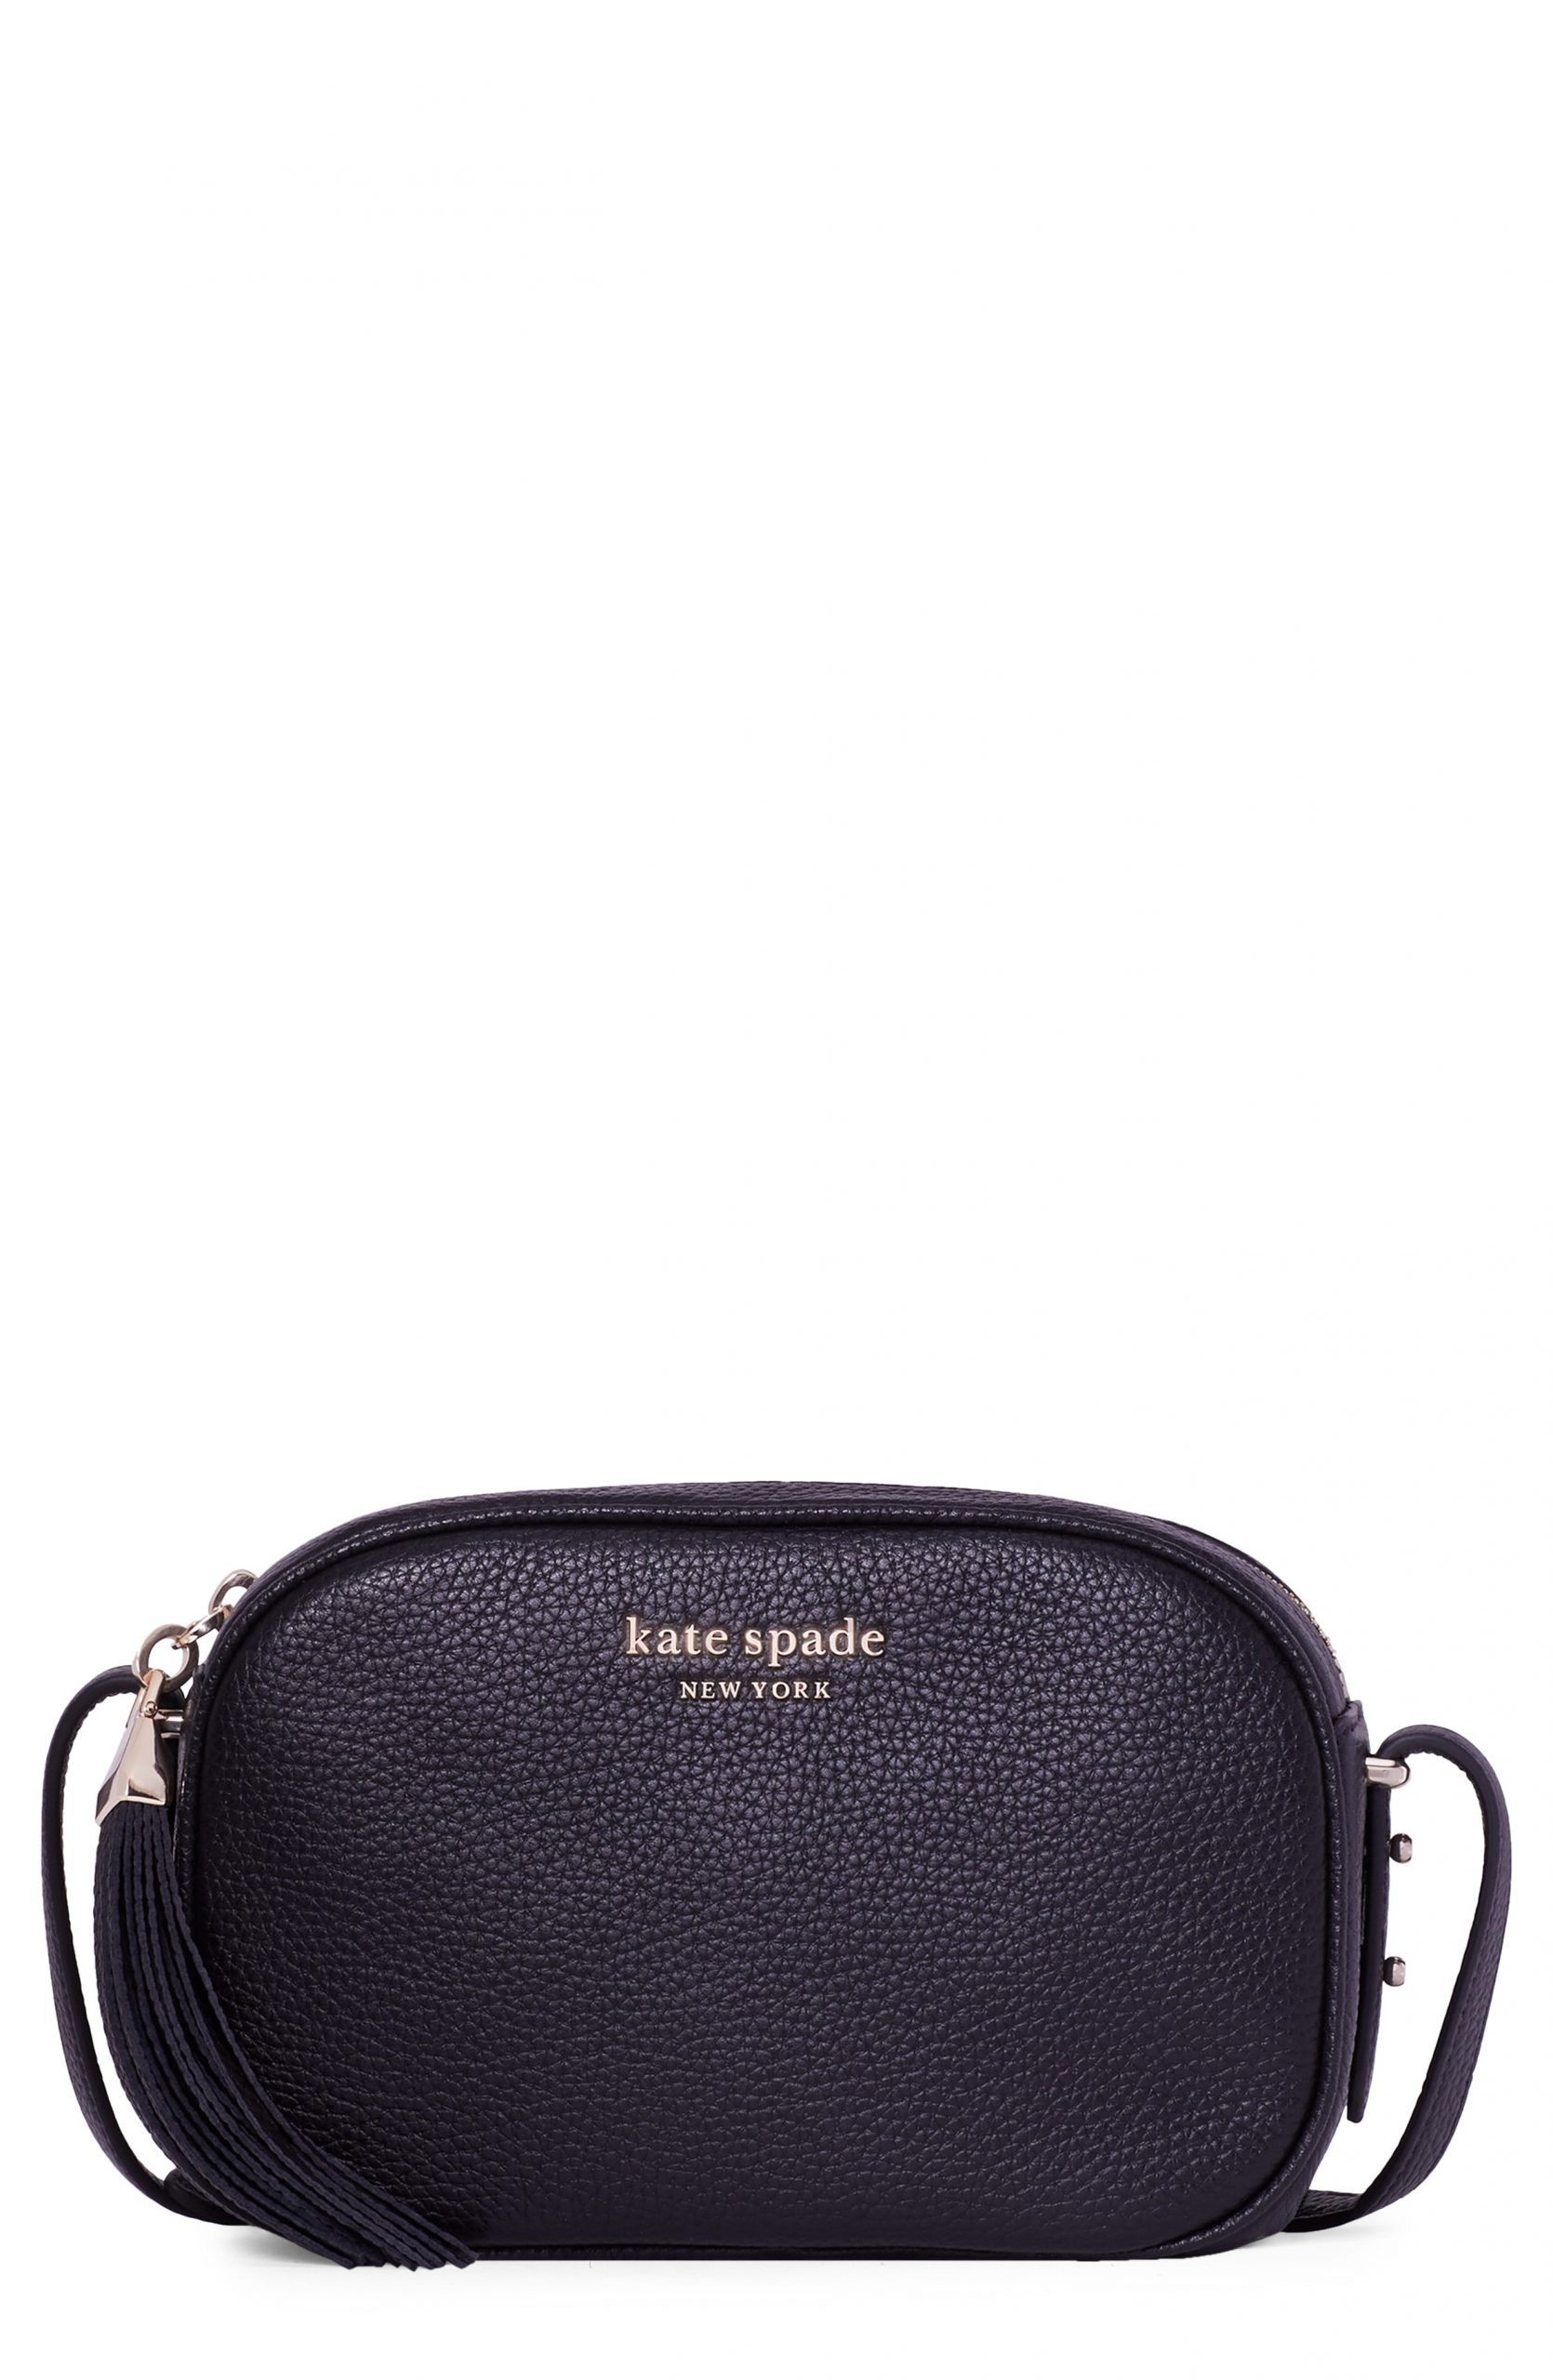 Kate Spade New York Annabel Medium Camera Bag - Black | Fashion Gone Rogue